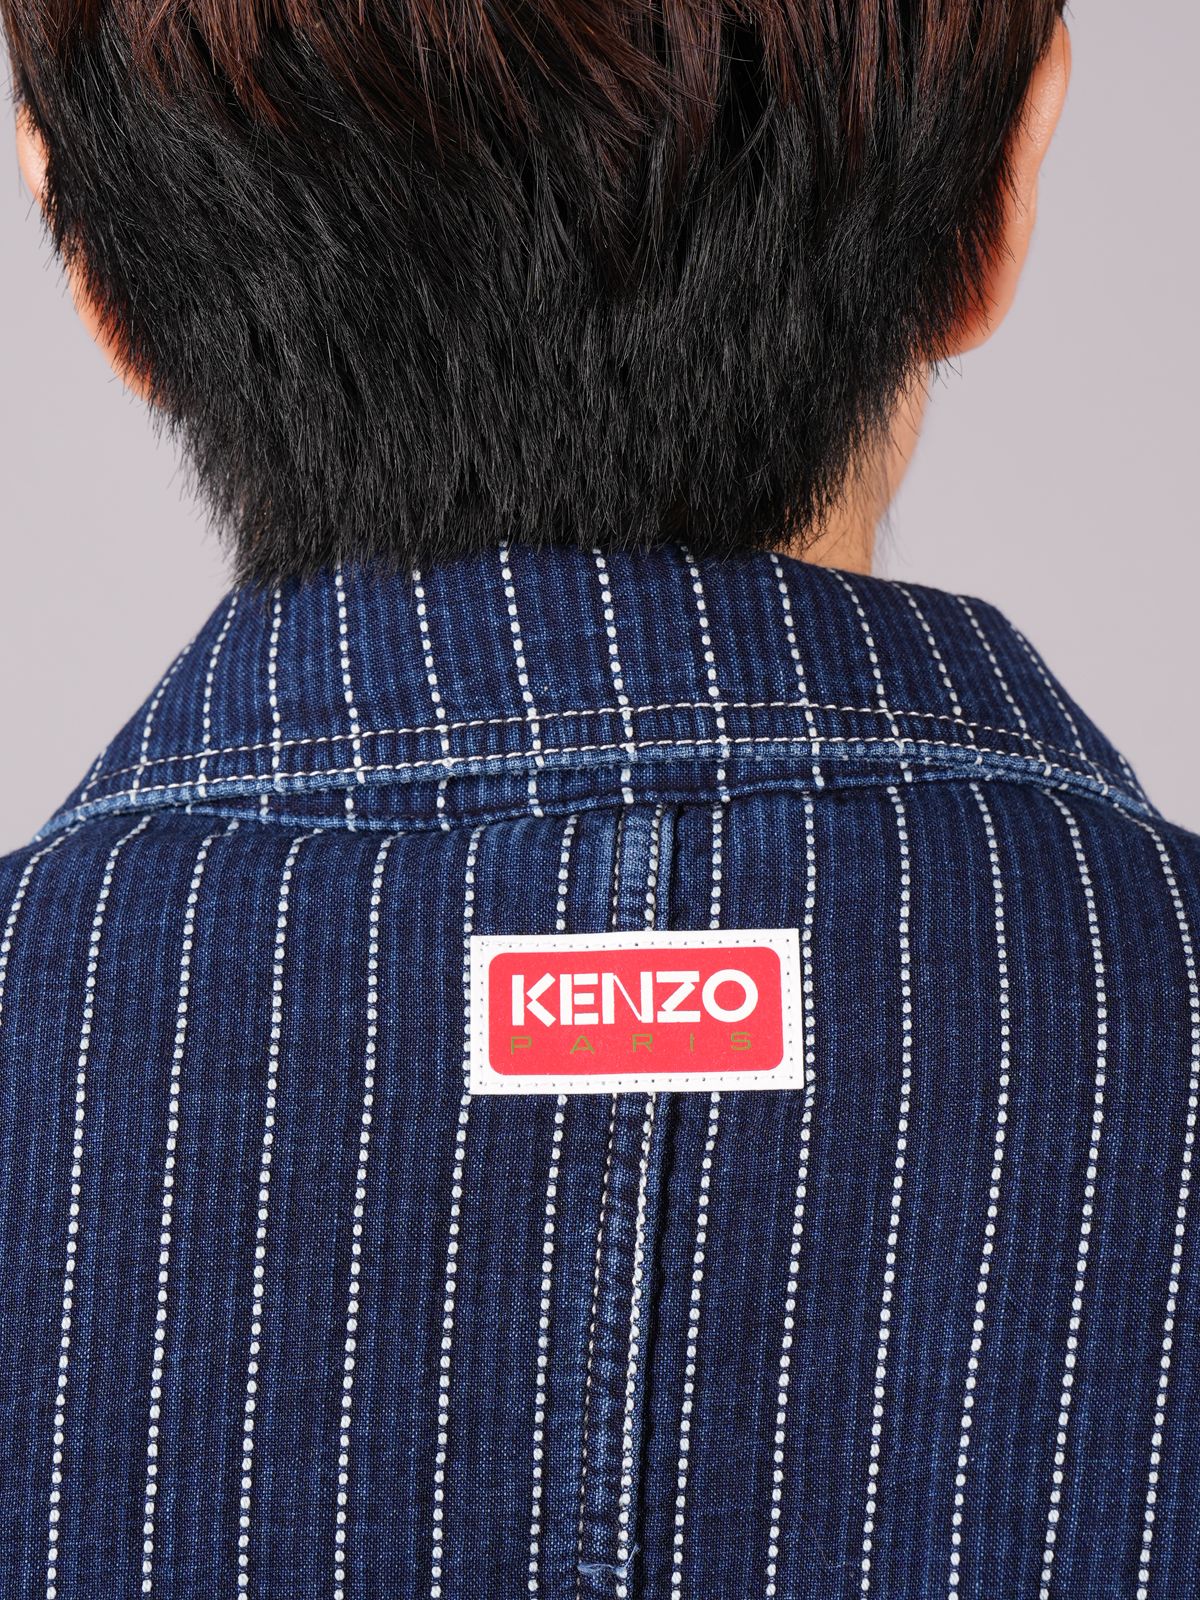 KENZO - 【ラスト1点】STRAIGHT DENIM WORKWEAR JACKET / ストレート